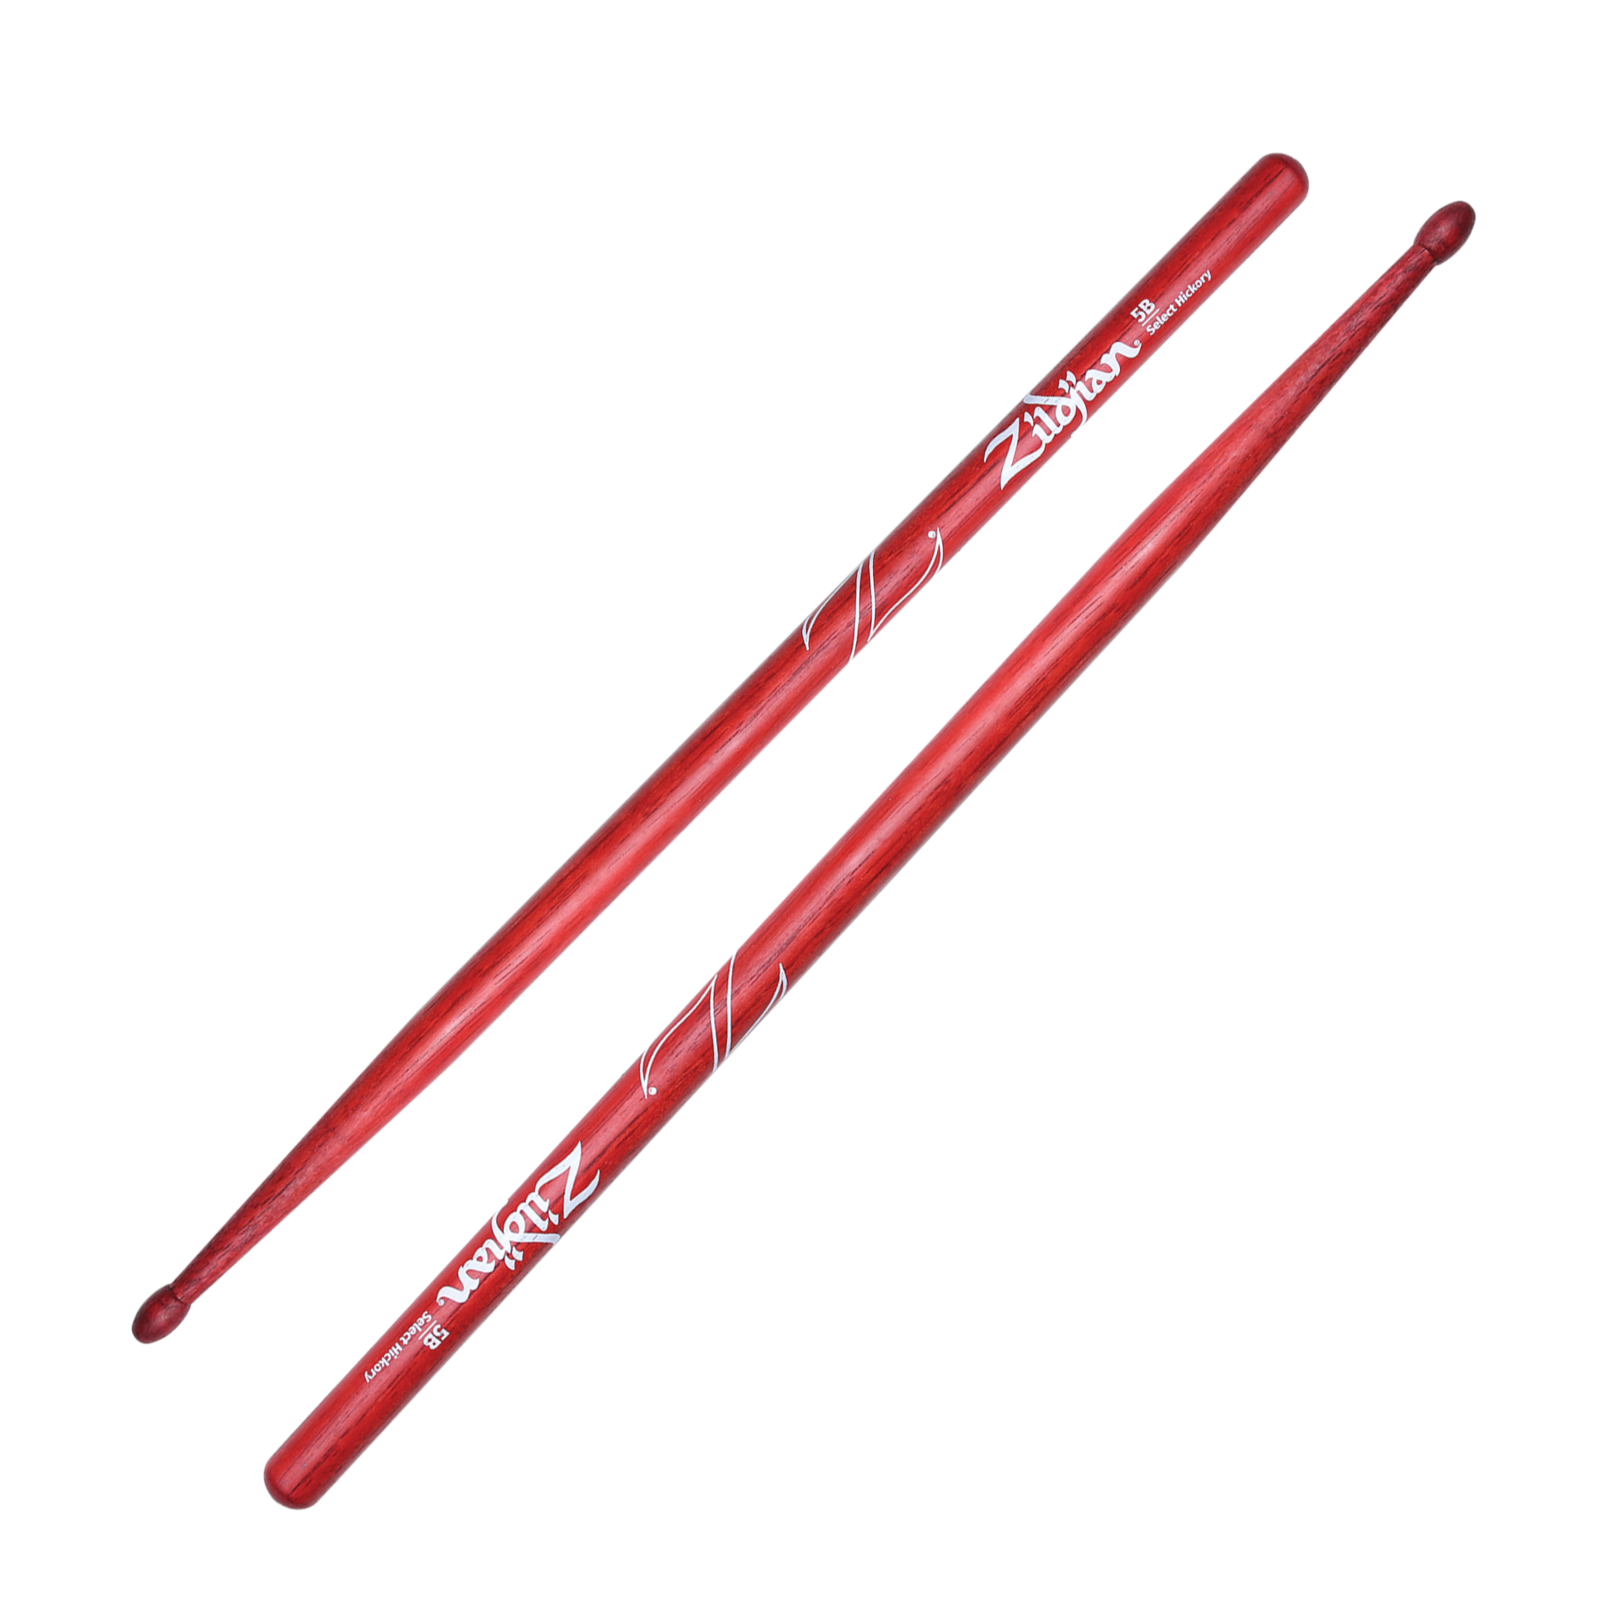 5B Red Wood Tip Drumsticks